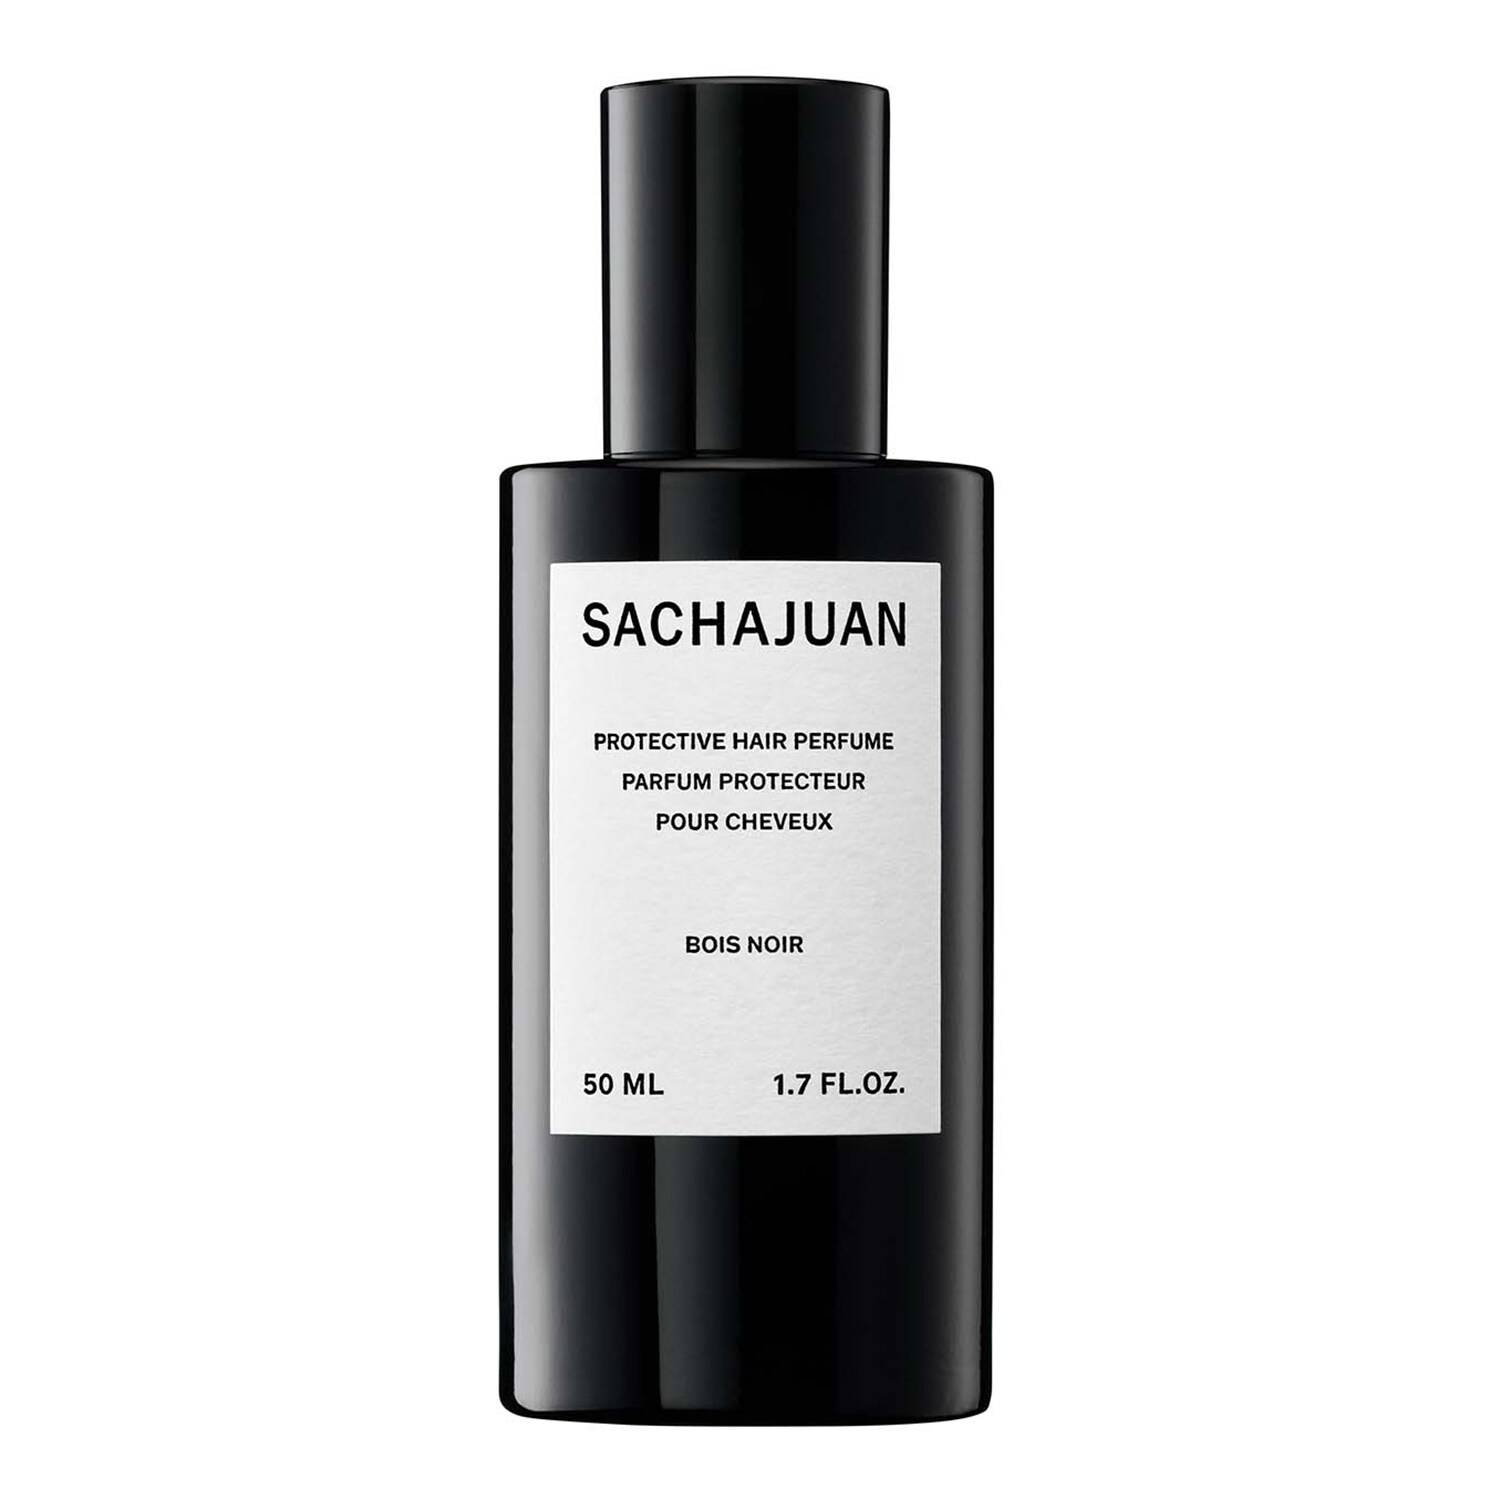 Sachajuan Protective Hair Perfume Bois Noir 50Ml